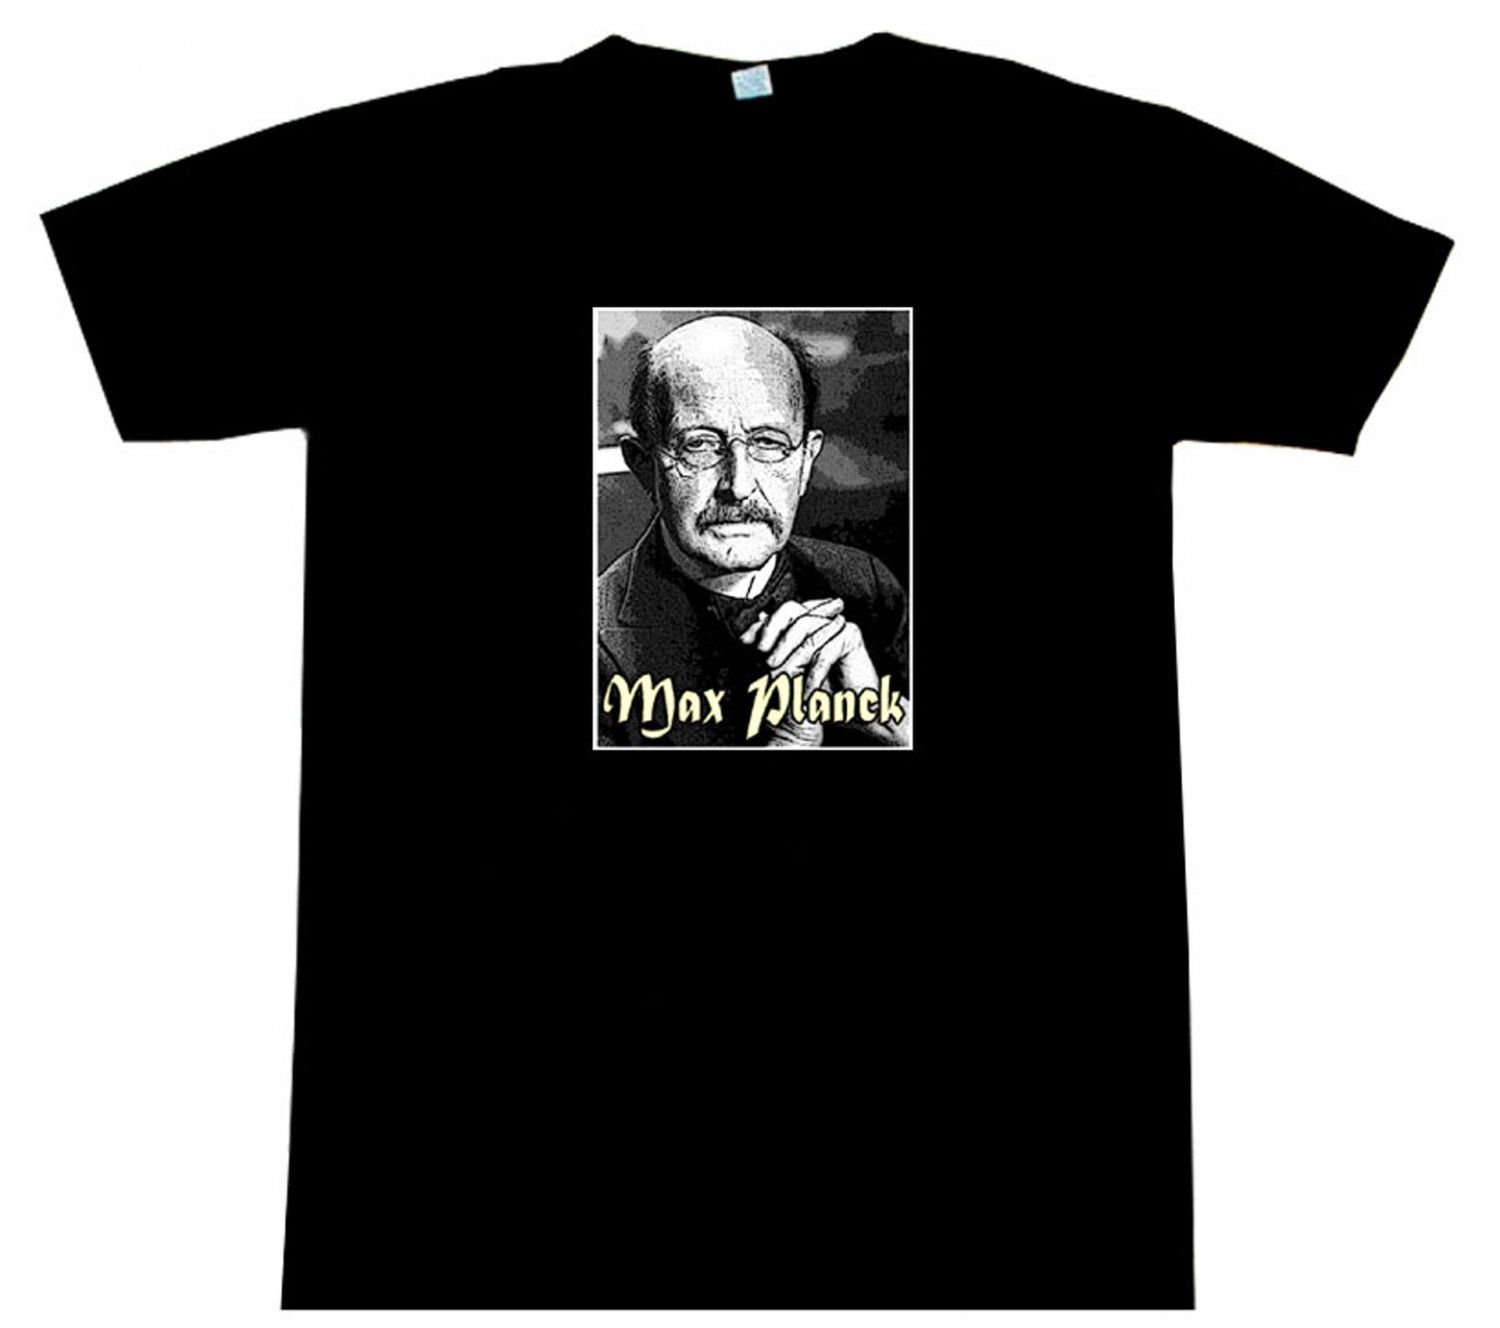 Max Planck T-Shirt BEAUTIFUL!!